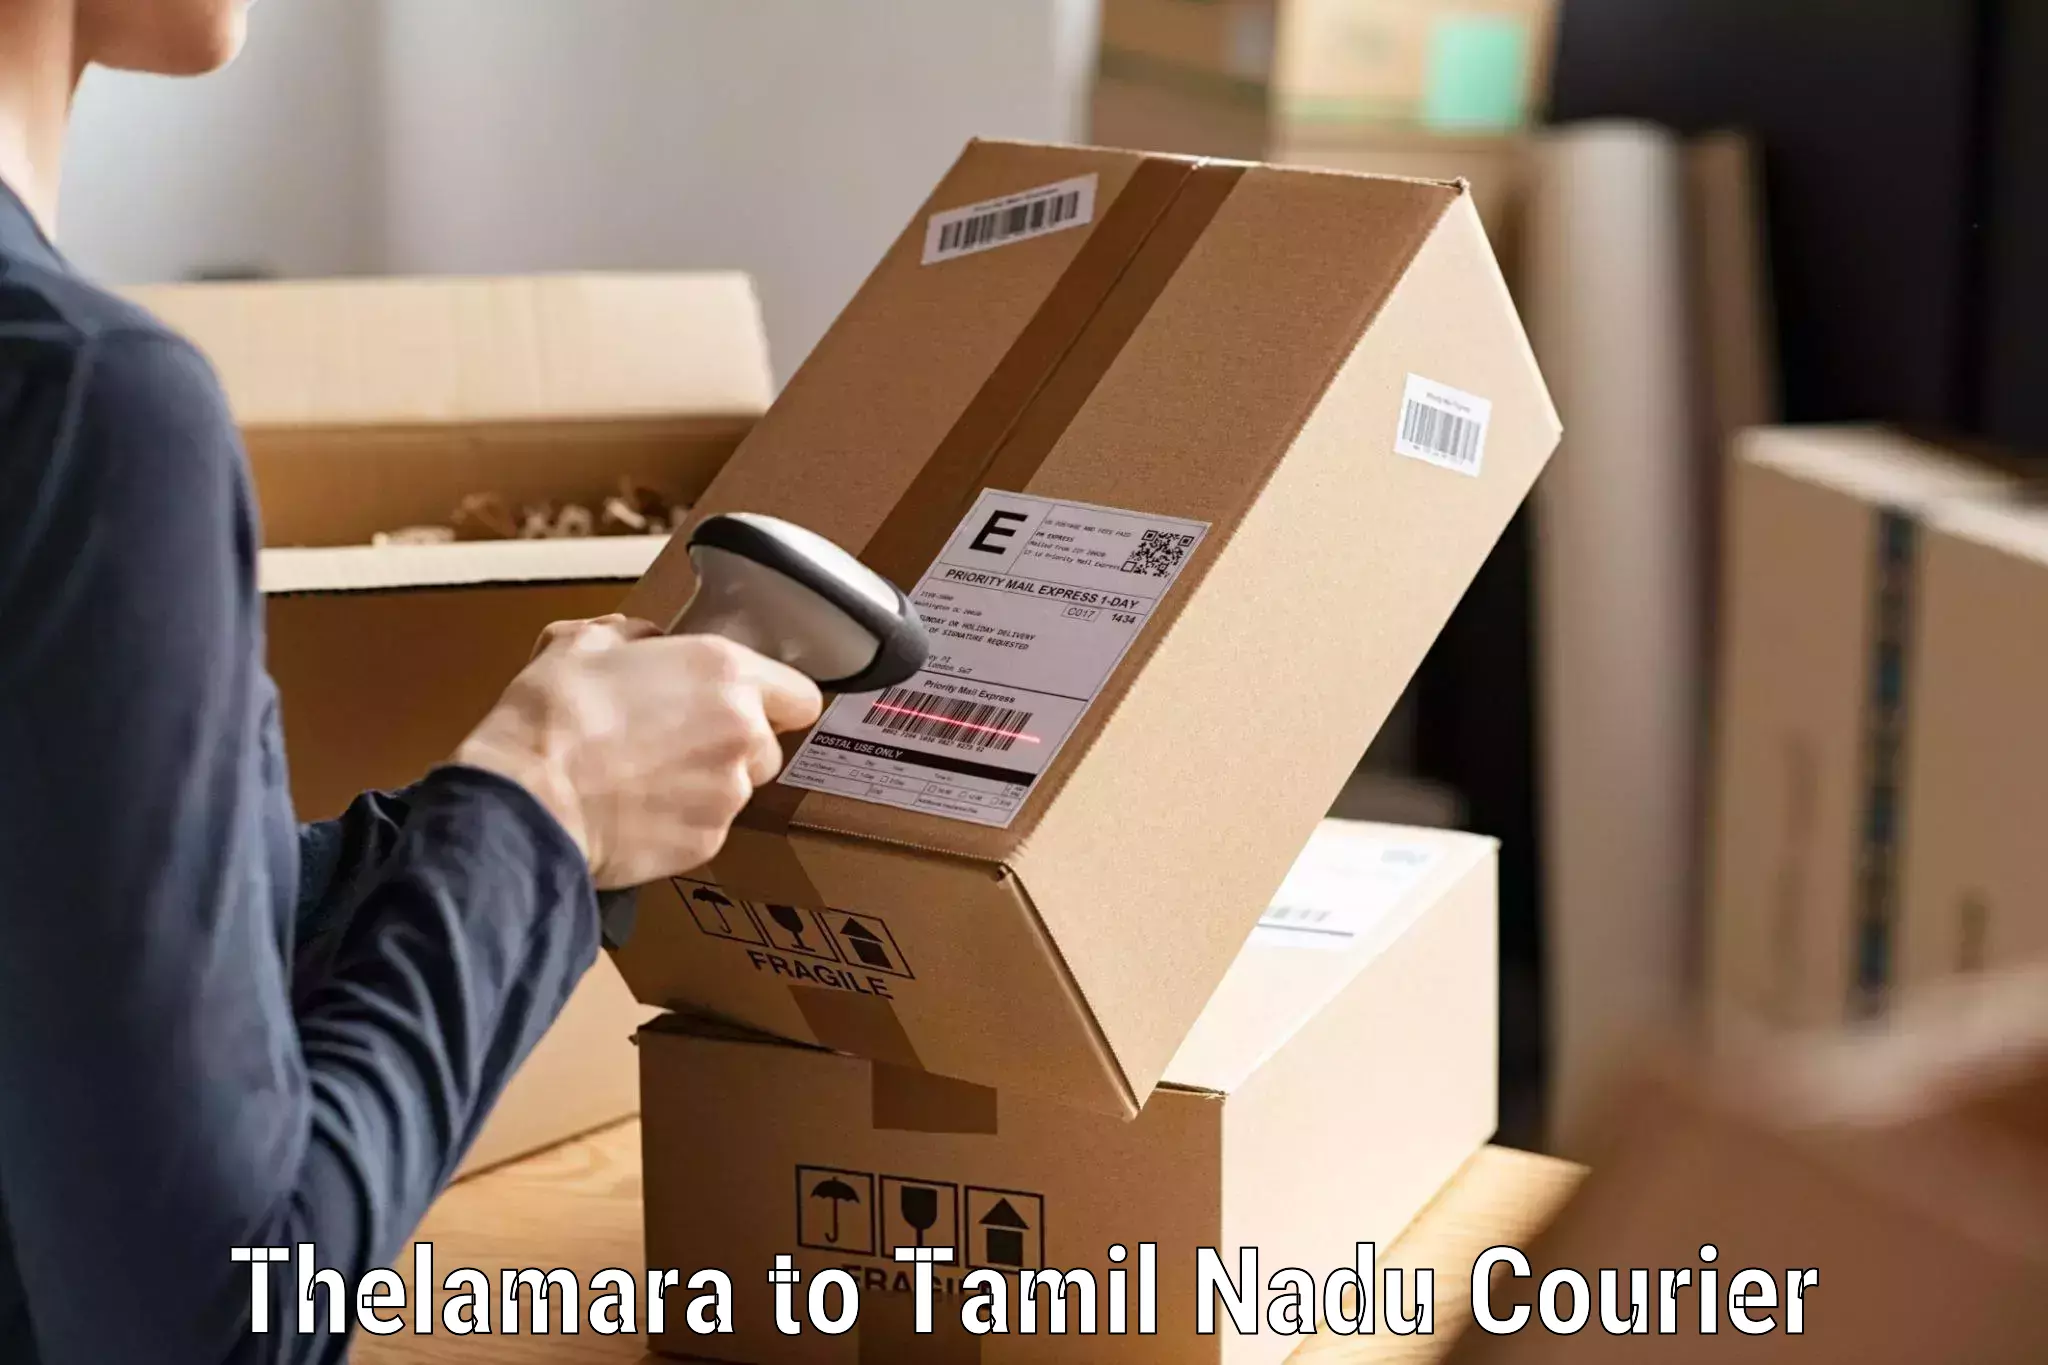 Courier service partnerships Thelamara to Tamil Nadu